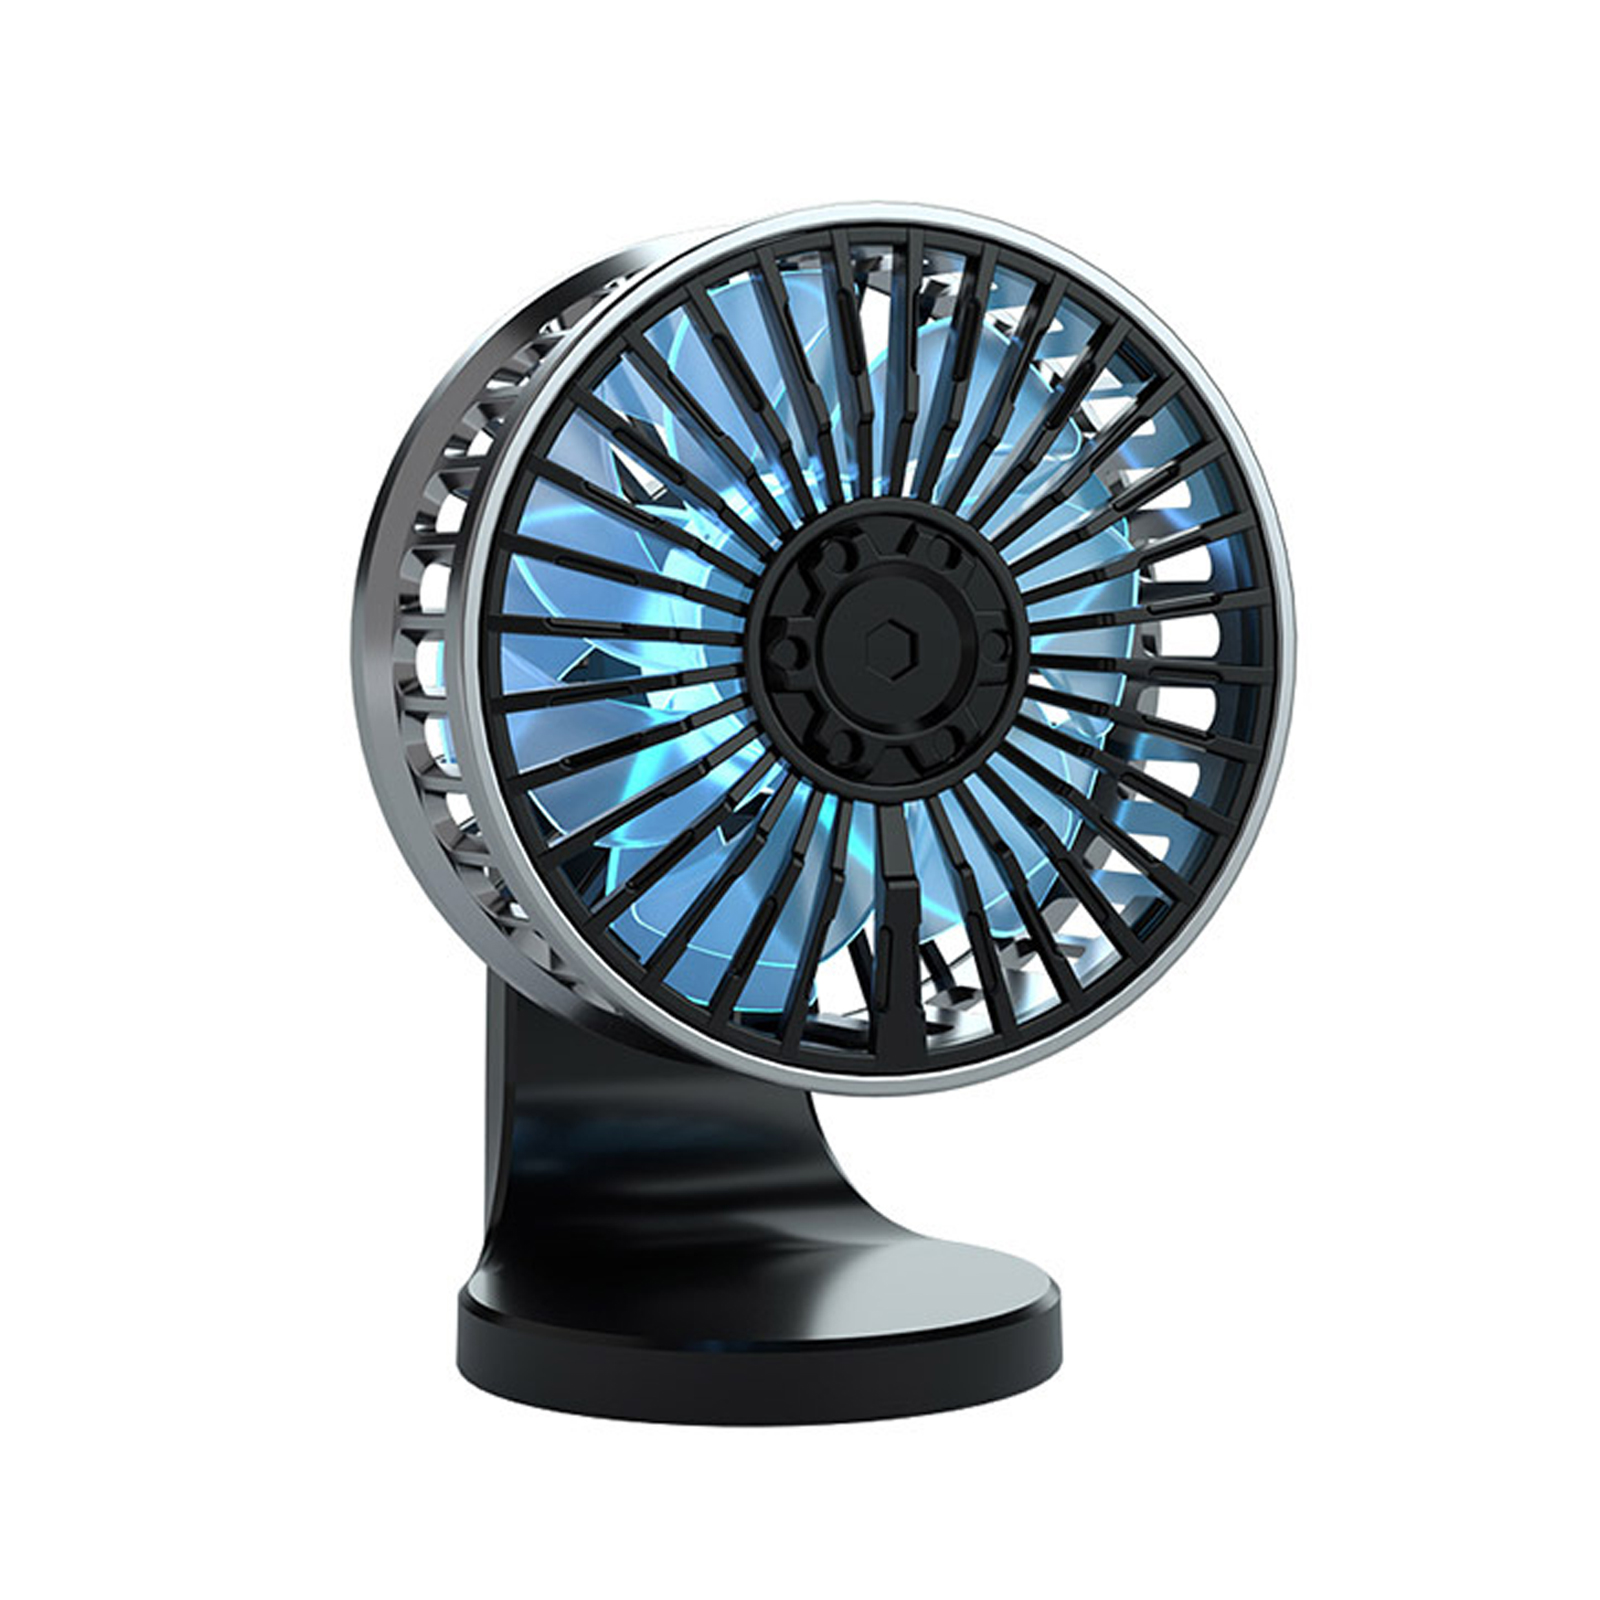 F210 USB Car Fan Multi-angle Rotation Dual Engine Windshield Desk Mount Fan Auto Cooler For Home Office